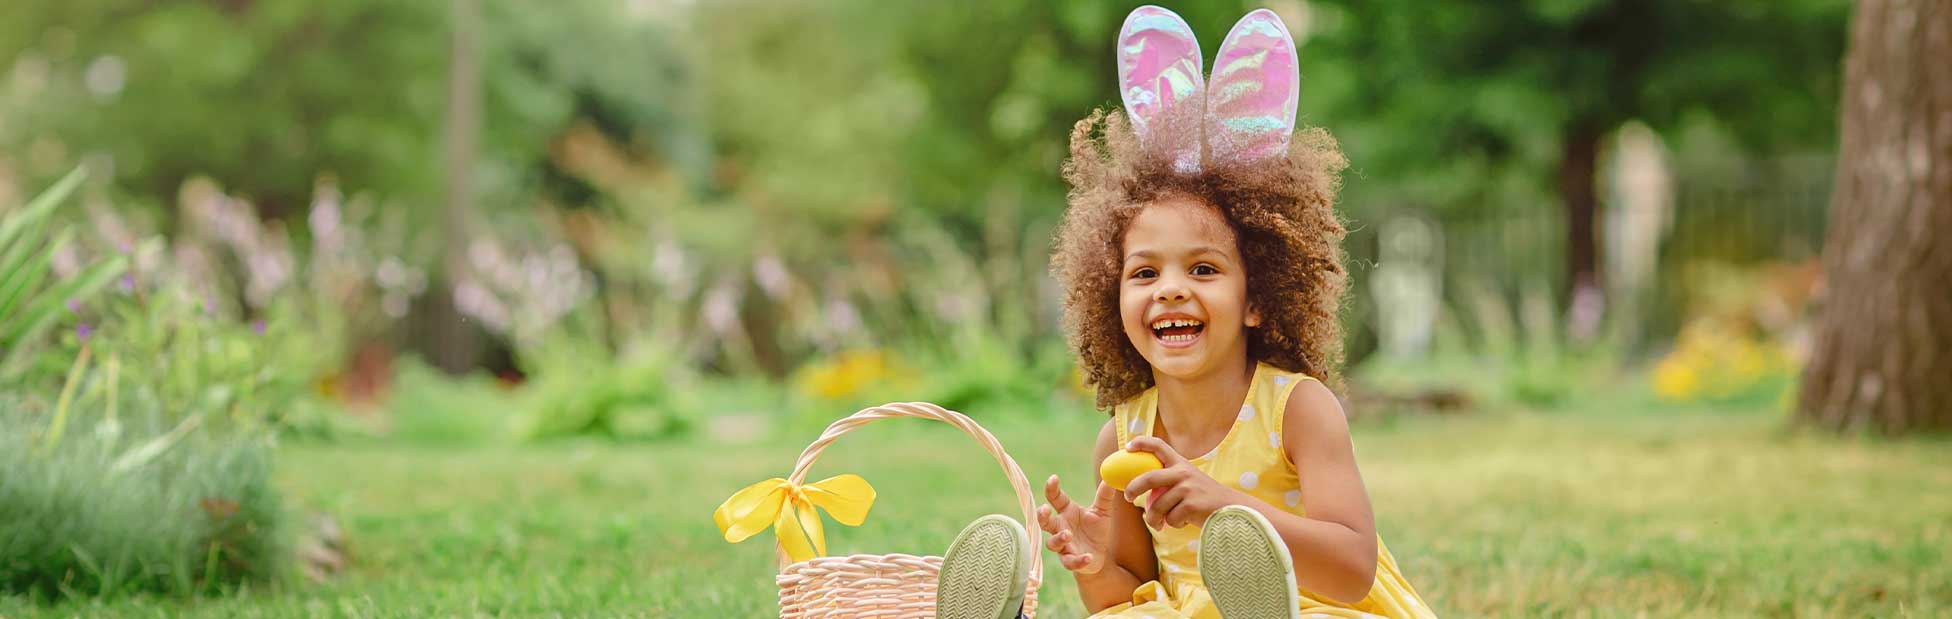 girl in garden with easter bunny ears